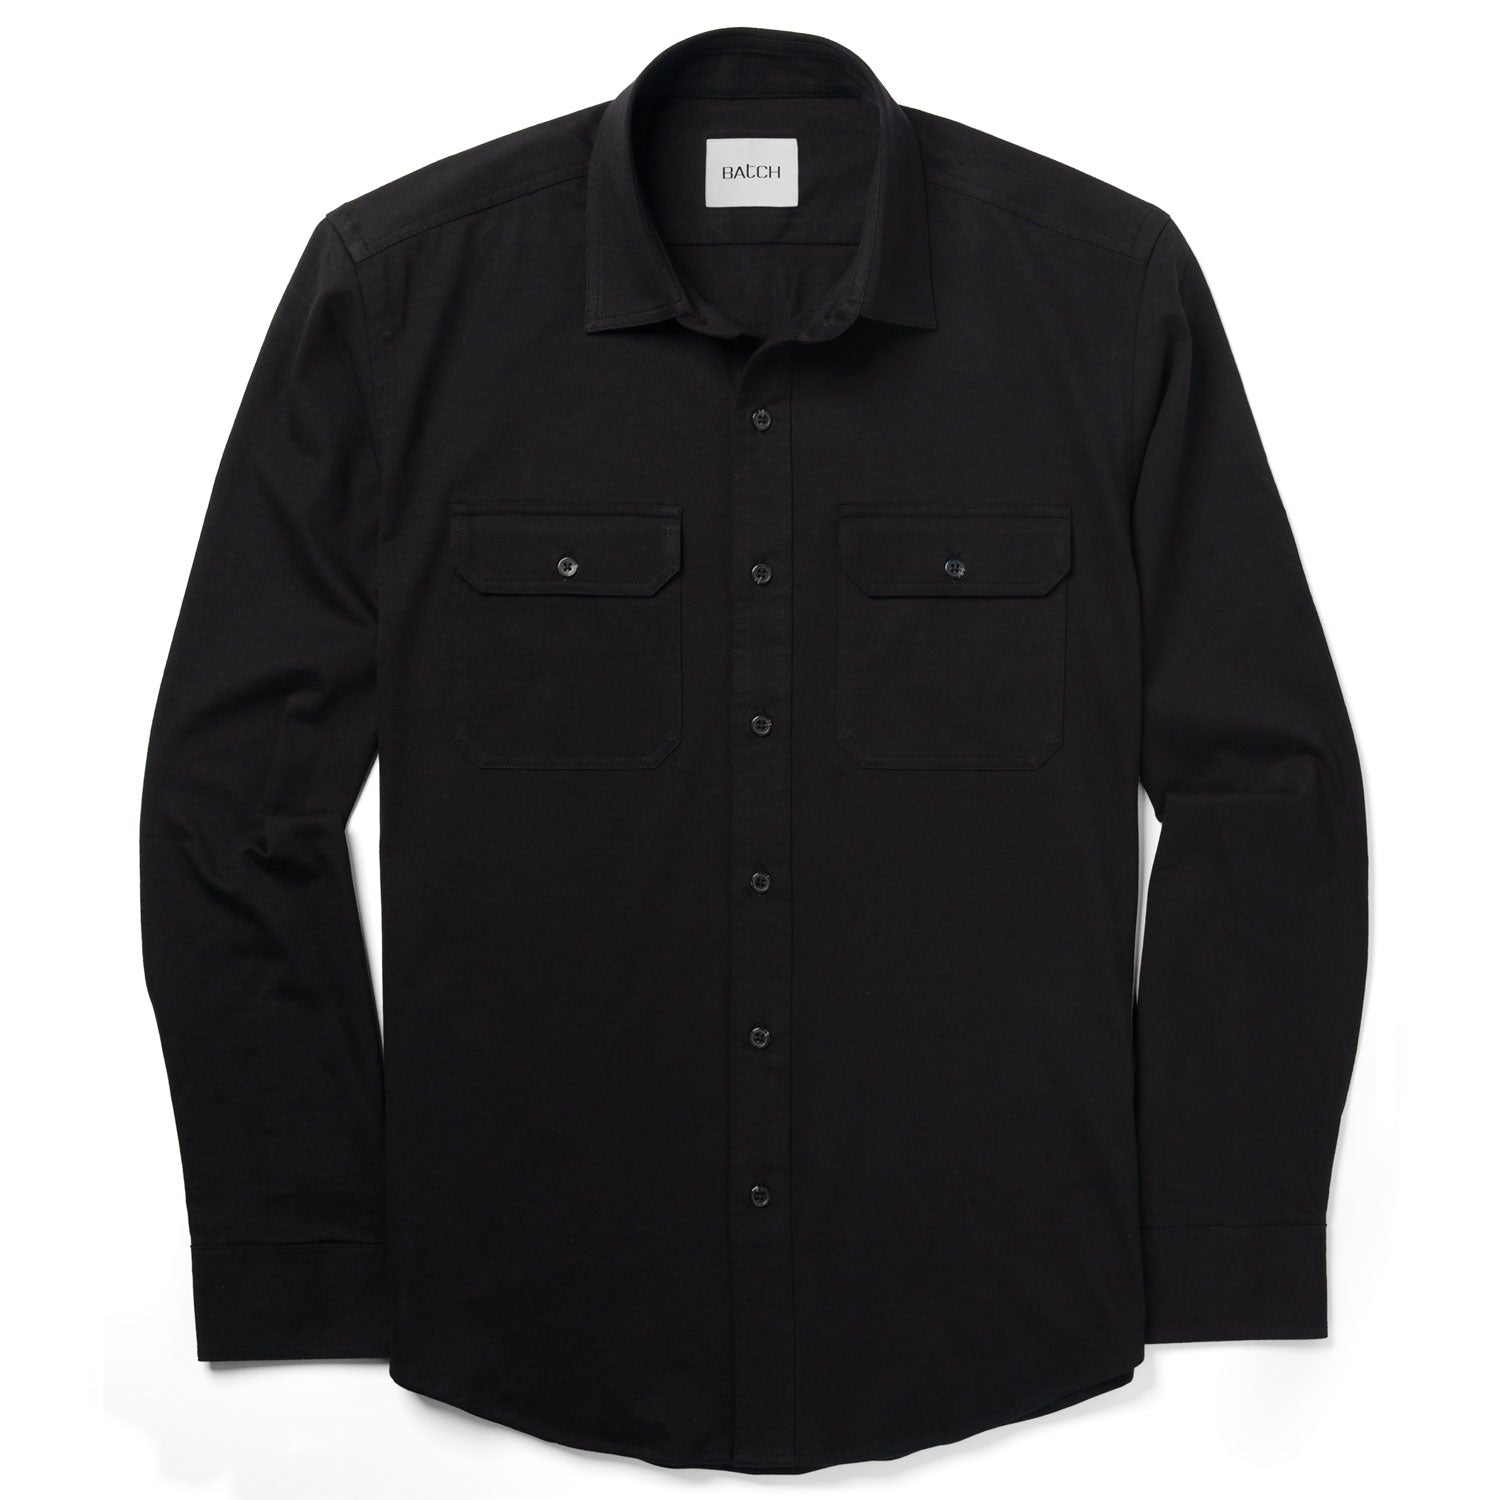 Batch Men's Utility Shirt - Constructor in Black Cotton Jersey | Batch